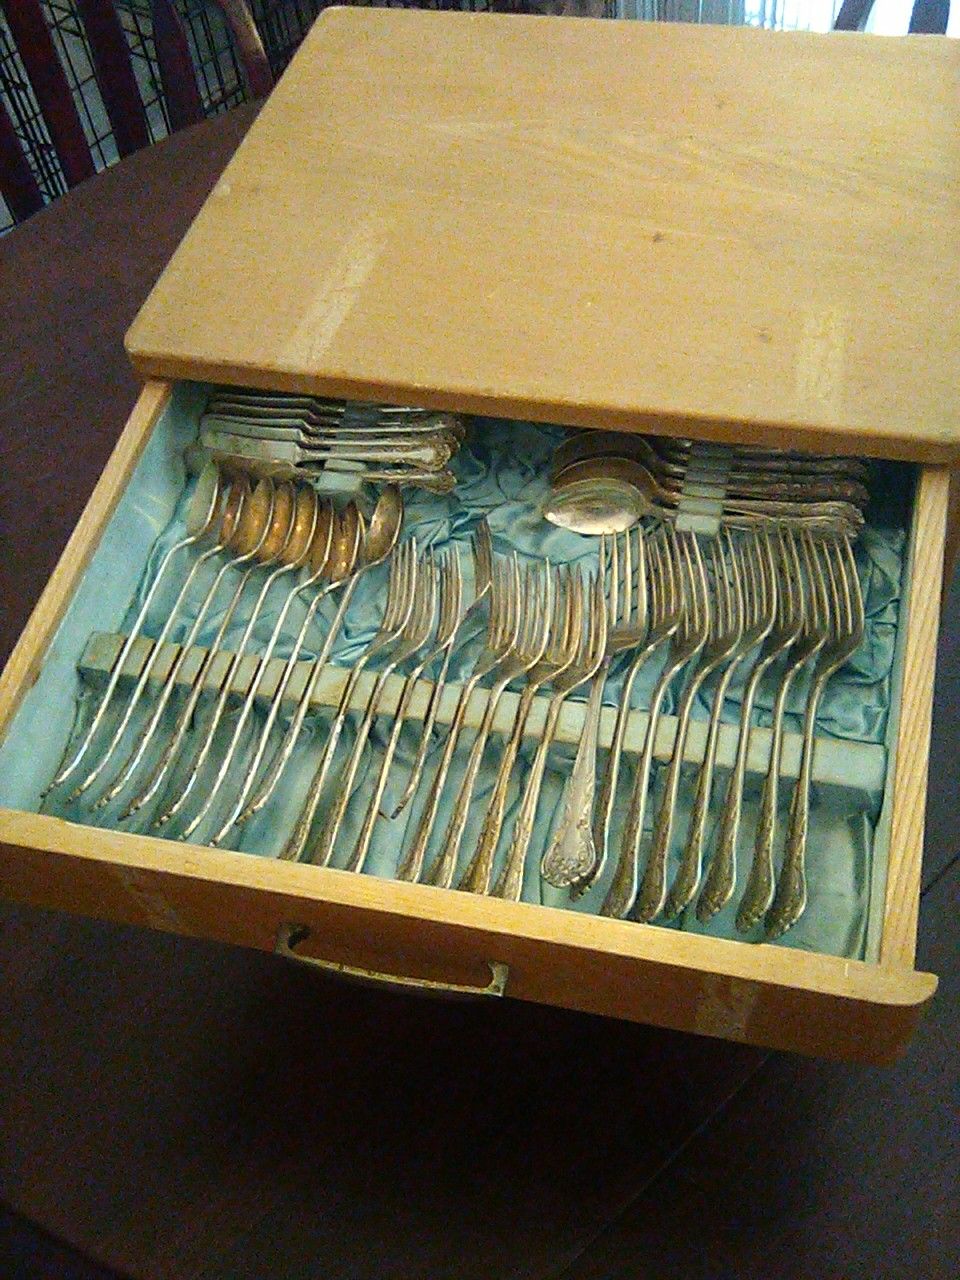 Nickel silver spoon, fork, knife set